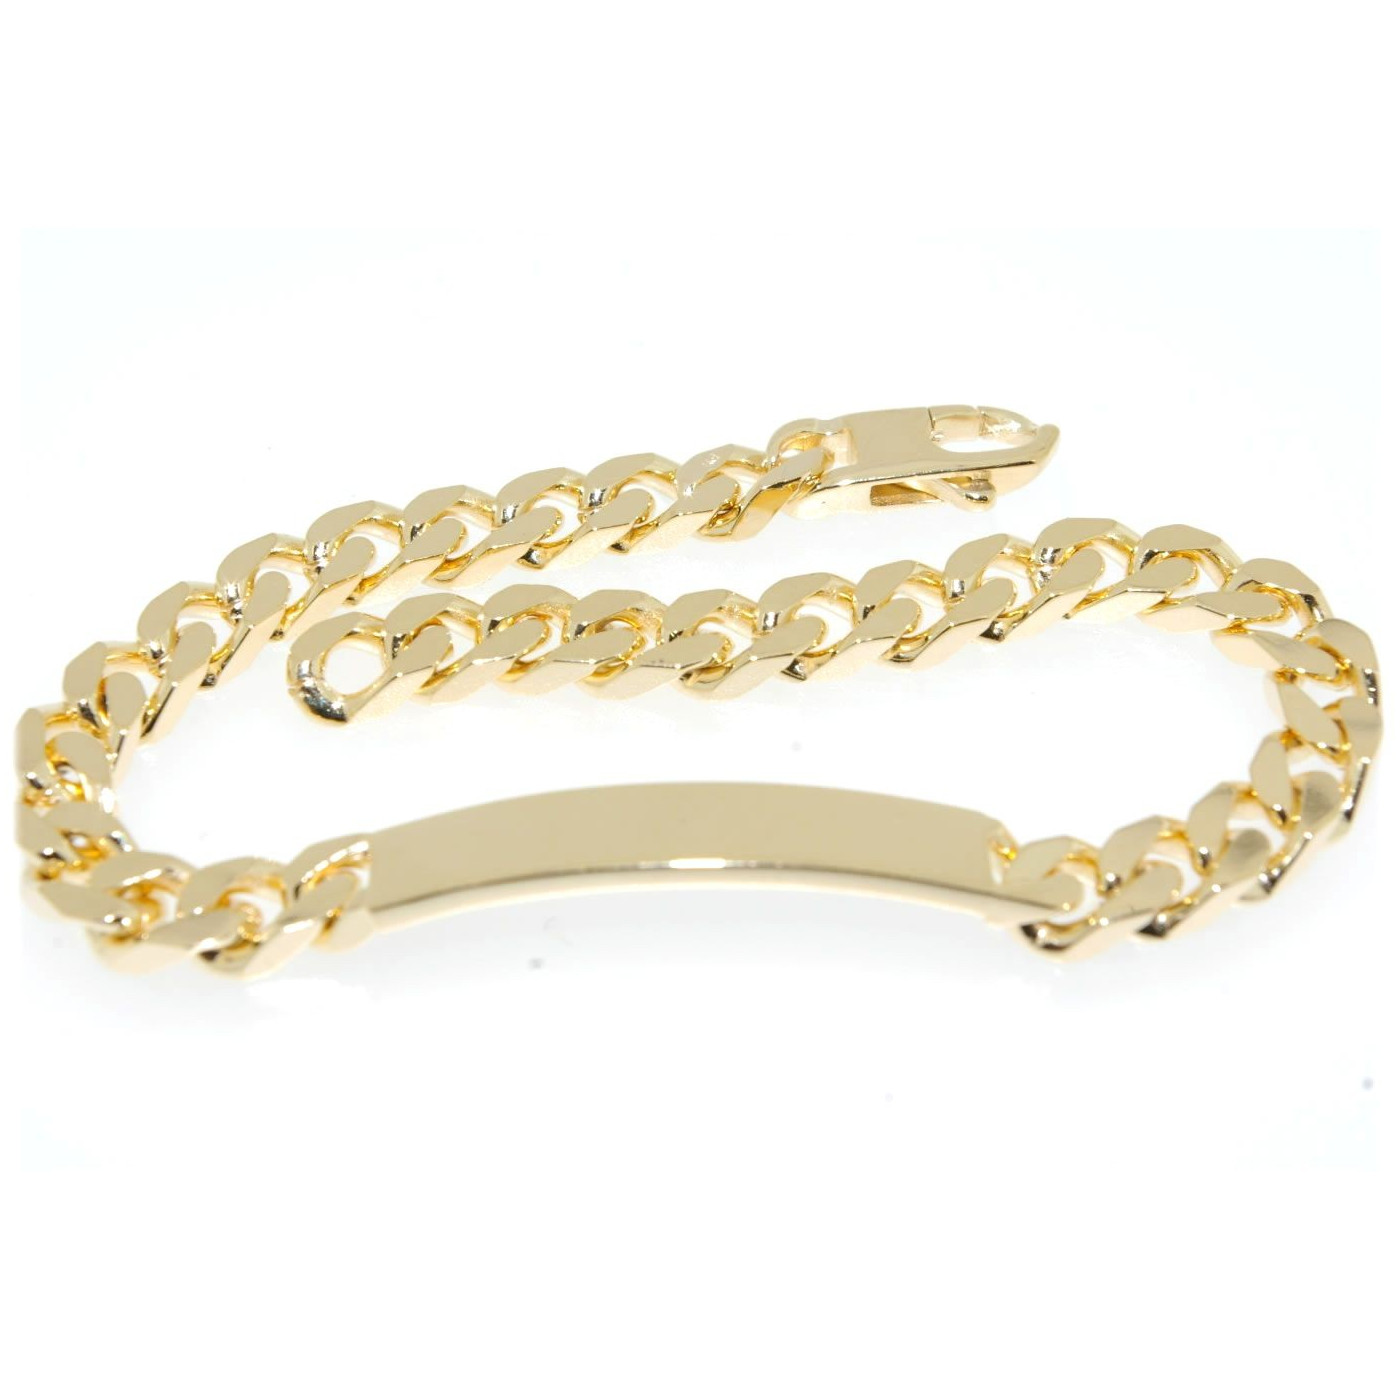 Identico Chain Silver Bracelet